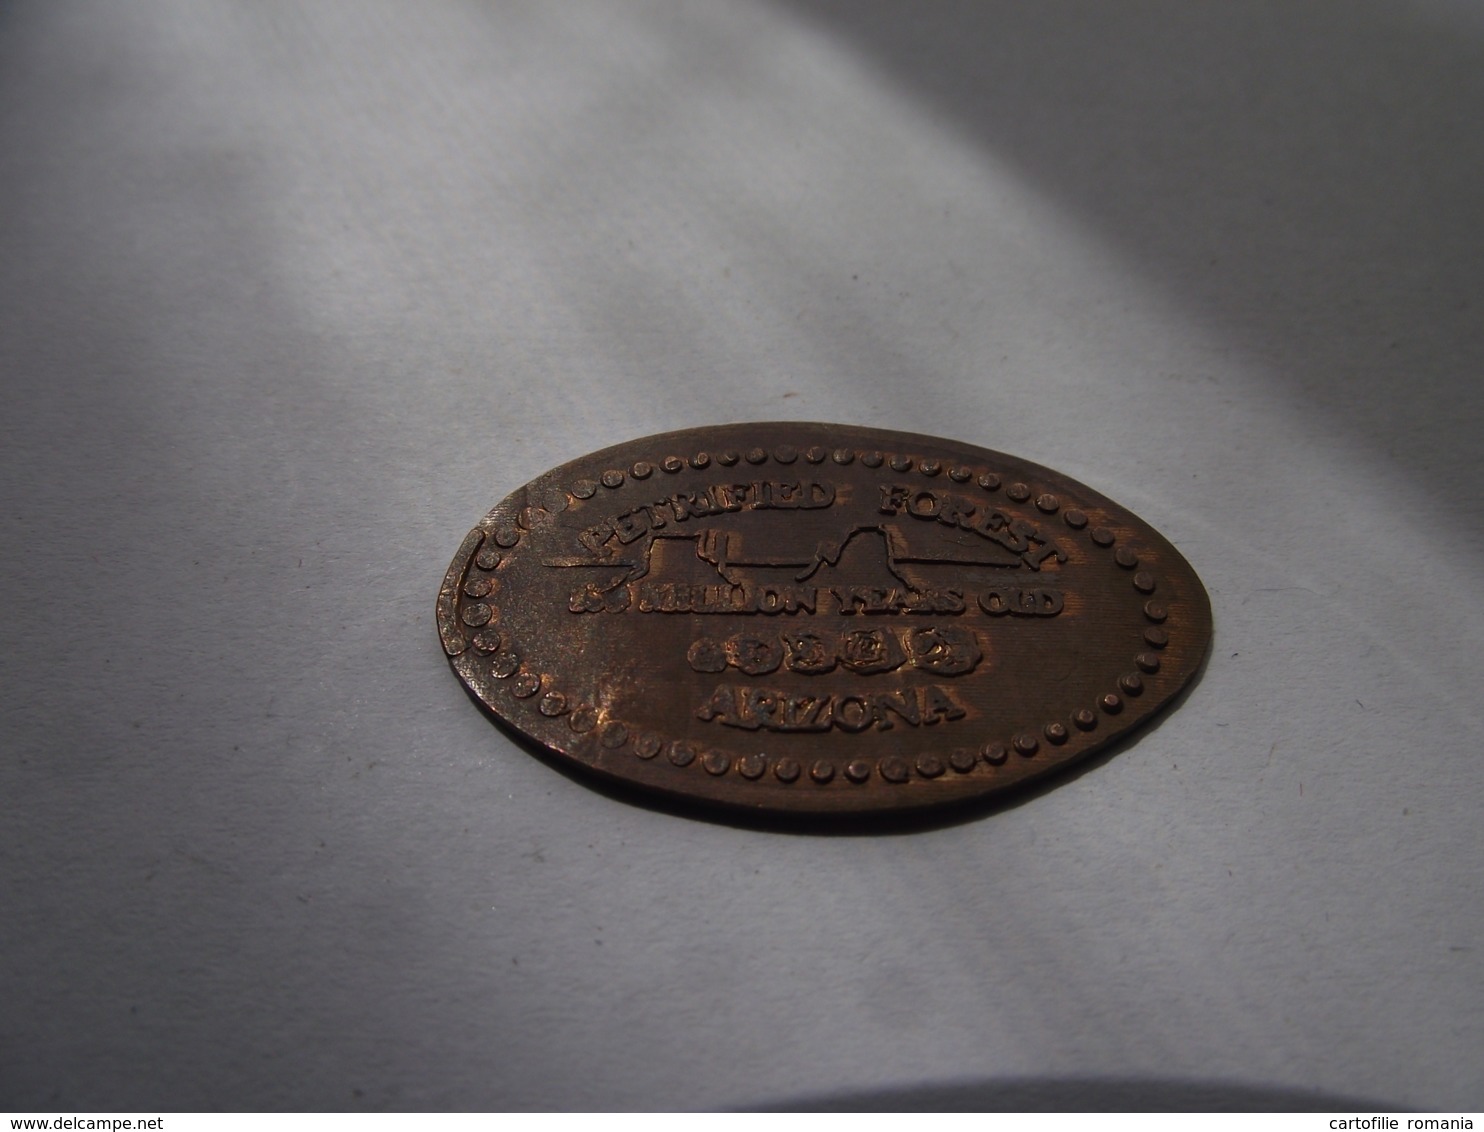 United States Of America USA - Elongated Coin - Petrified Forest National Park Arizona - Souvenirmunten (elongated Coins)